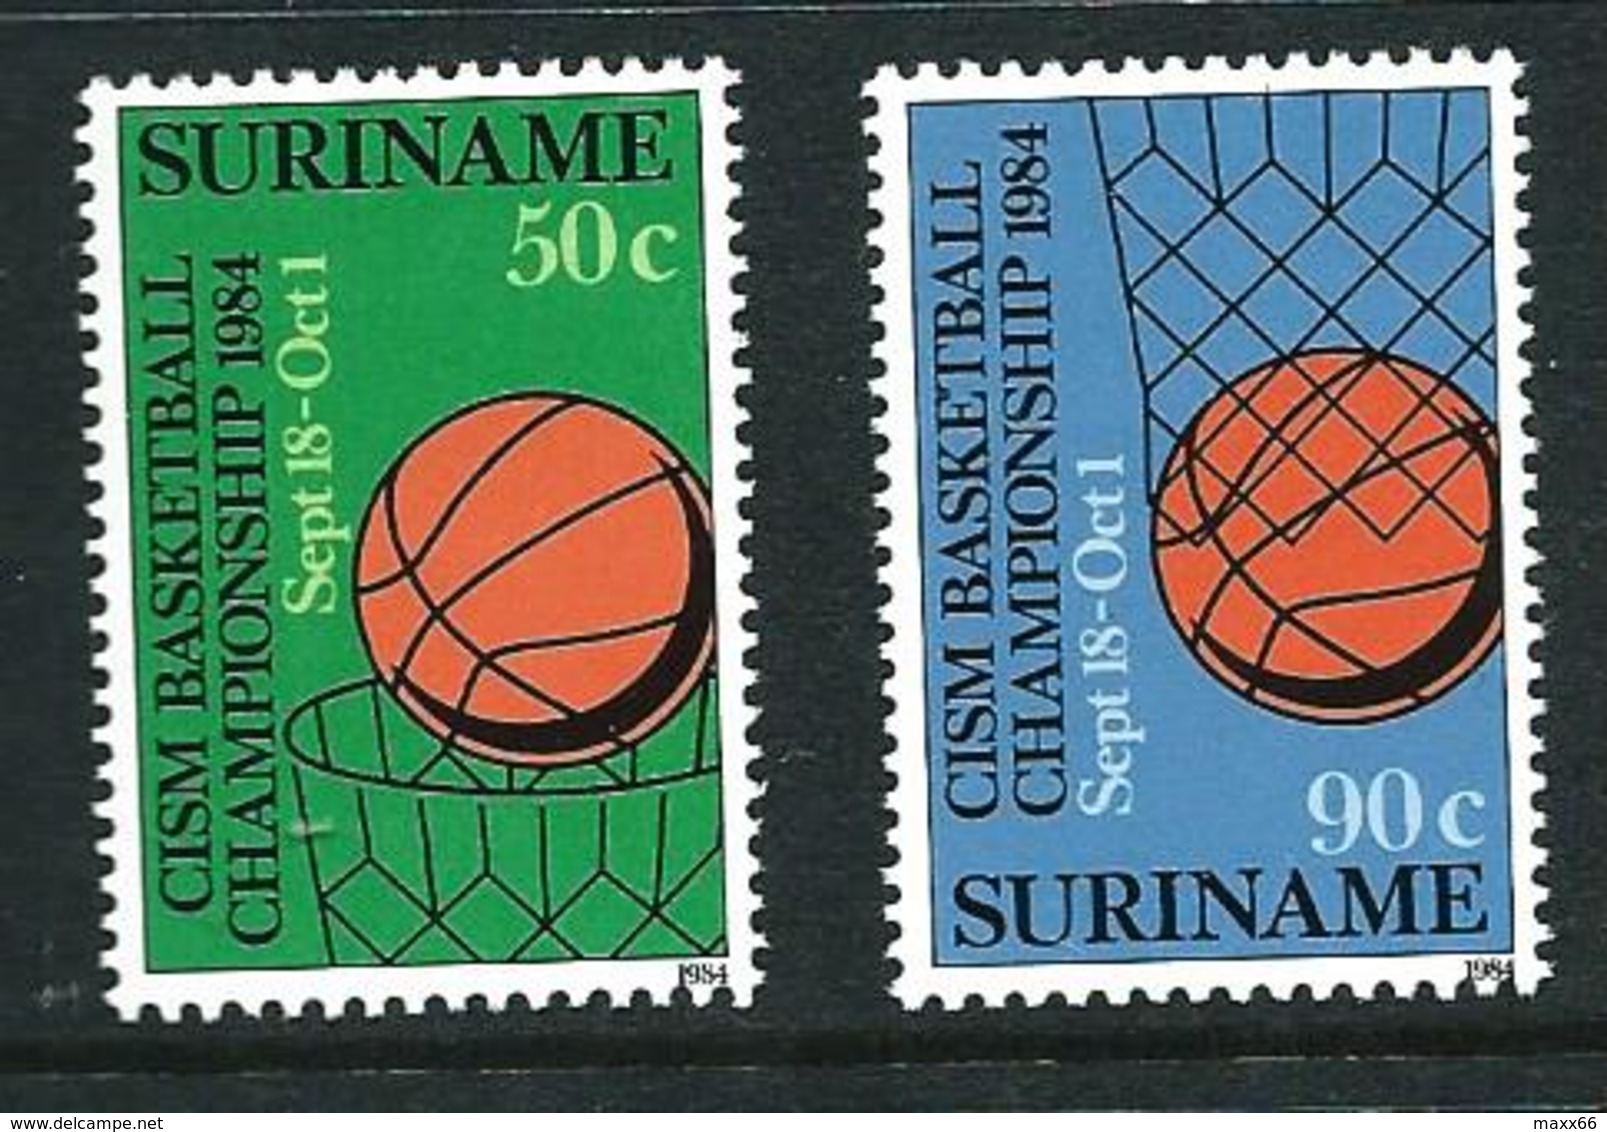 SURINAME MNH - 1984 International Military Sports Council Basketball Championship - Vari Cent - Michel SR 1098 1099 - Suriname